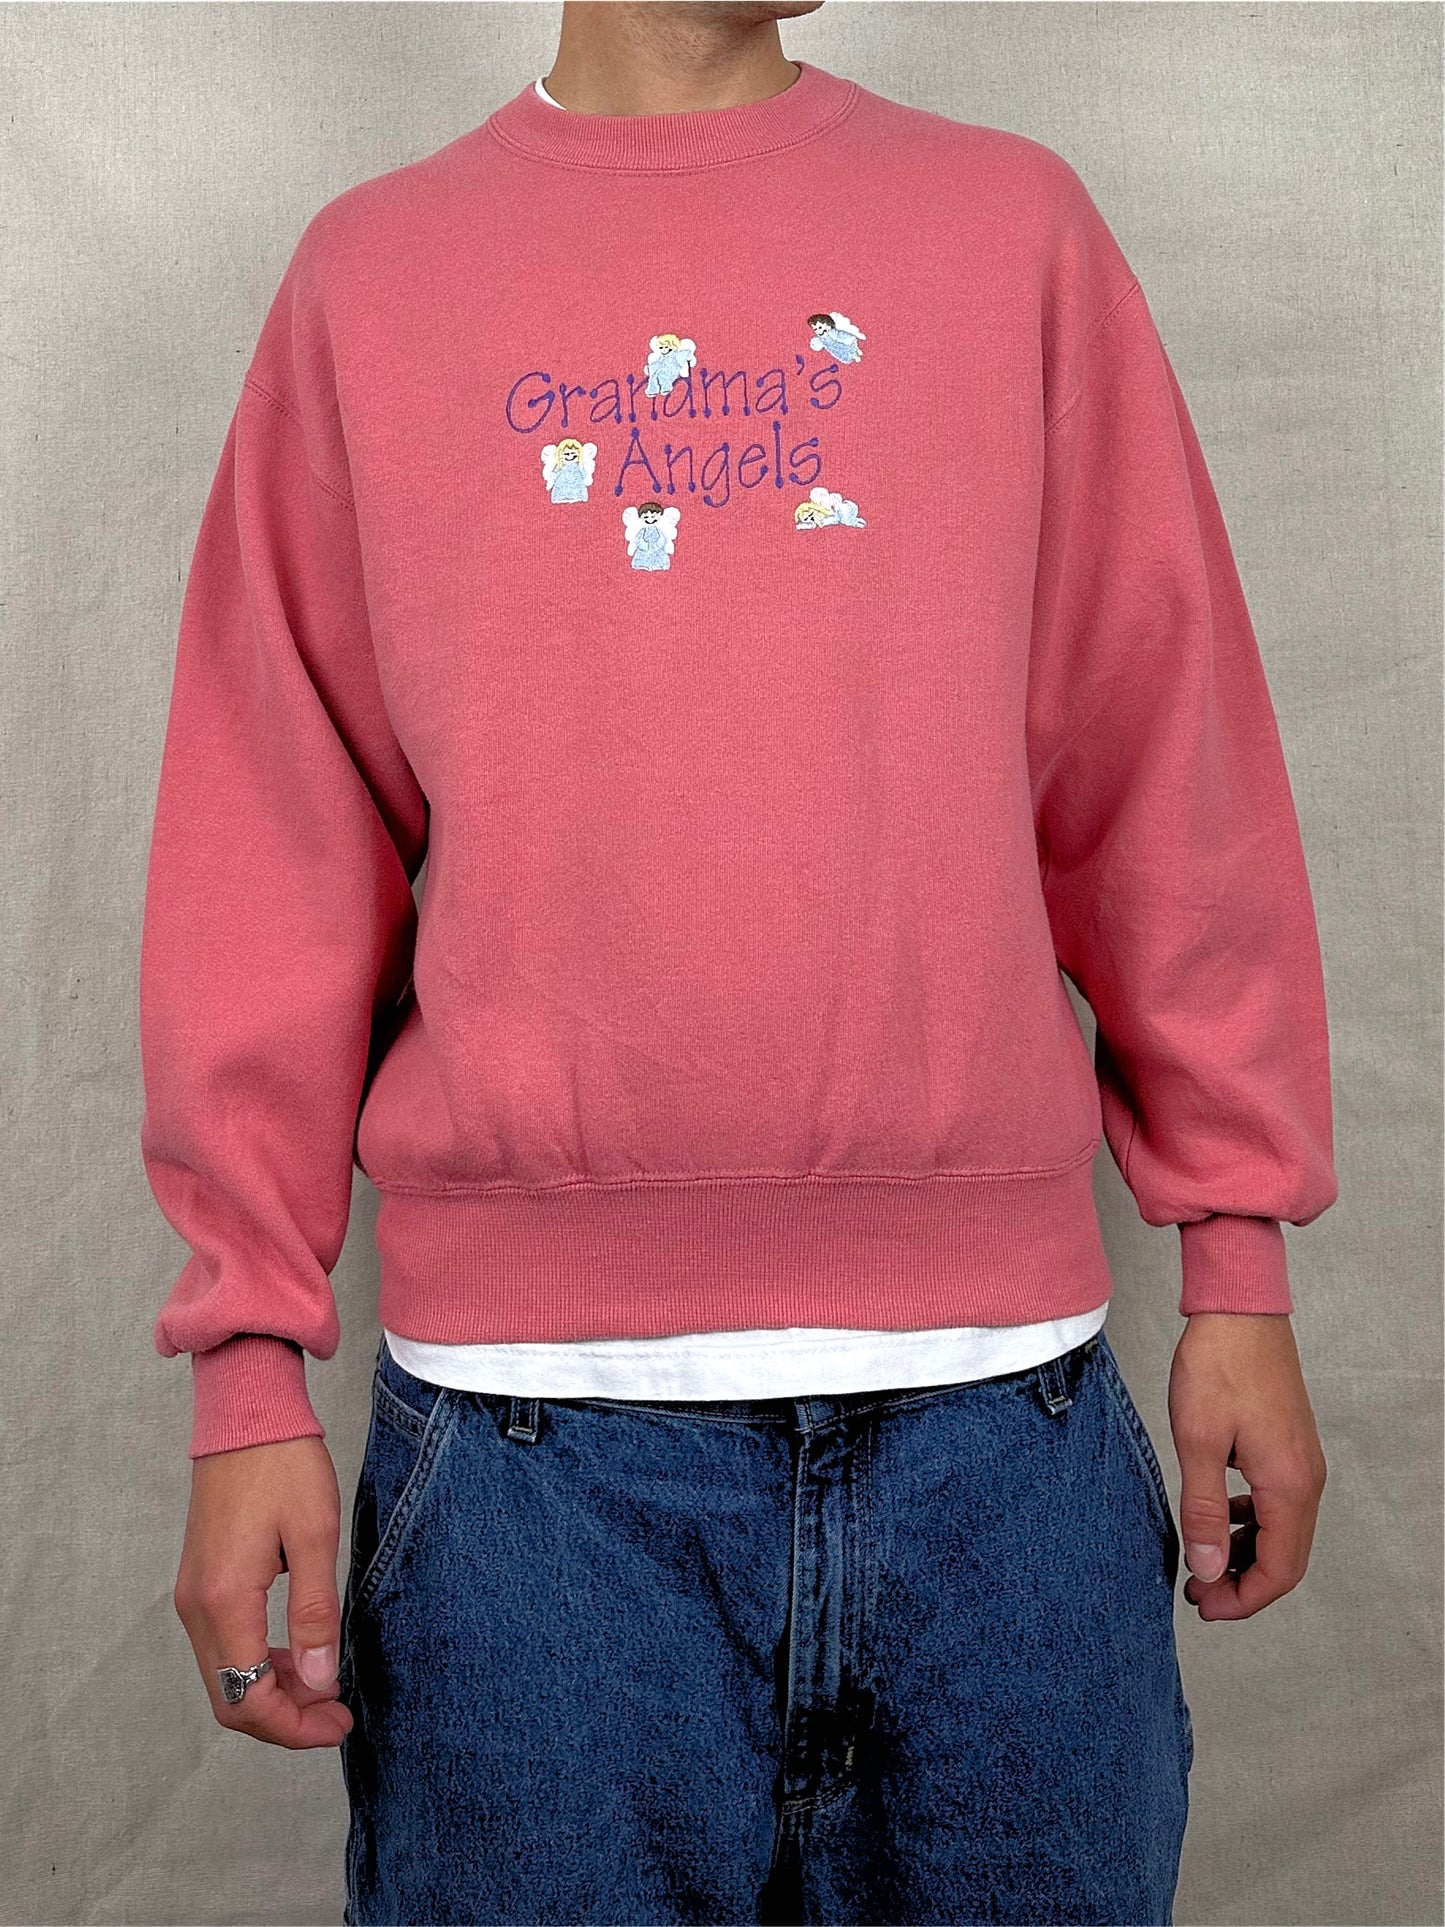 90's Grandma's Angels USA Made Embroidered Vintage Sweatshirt Size M